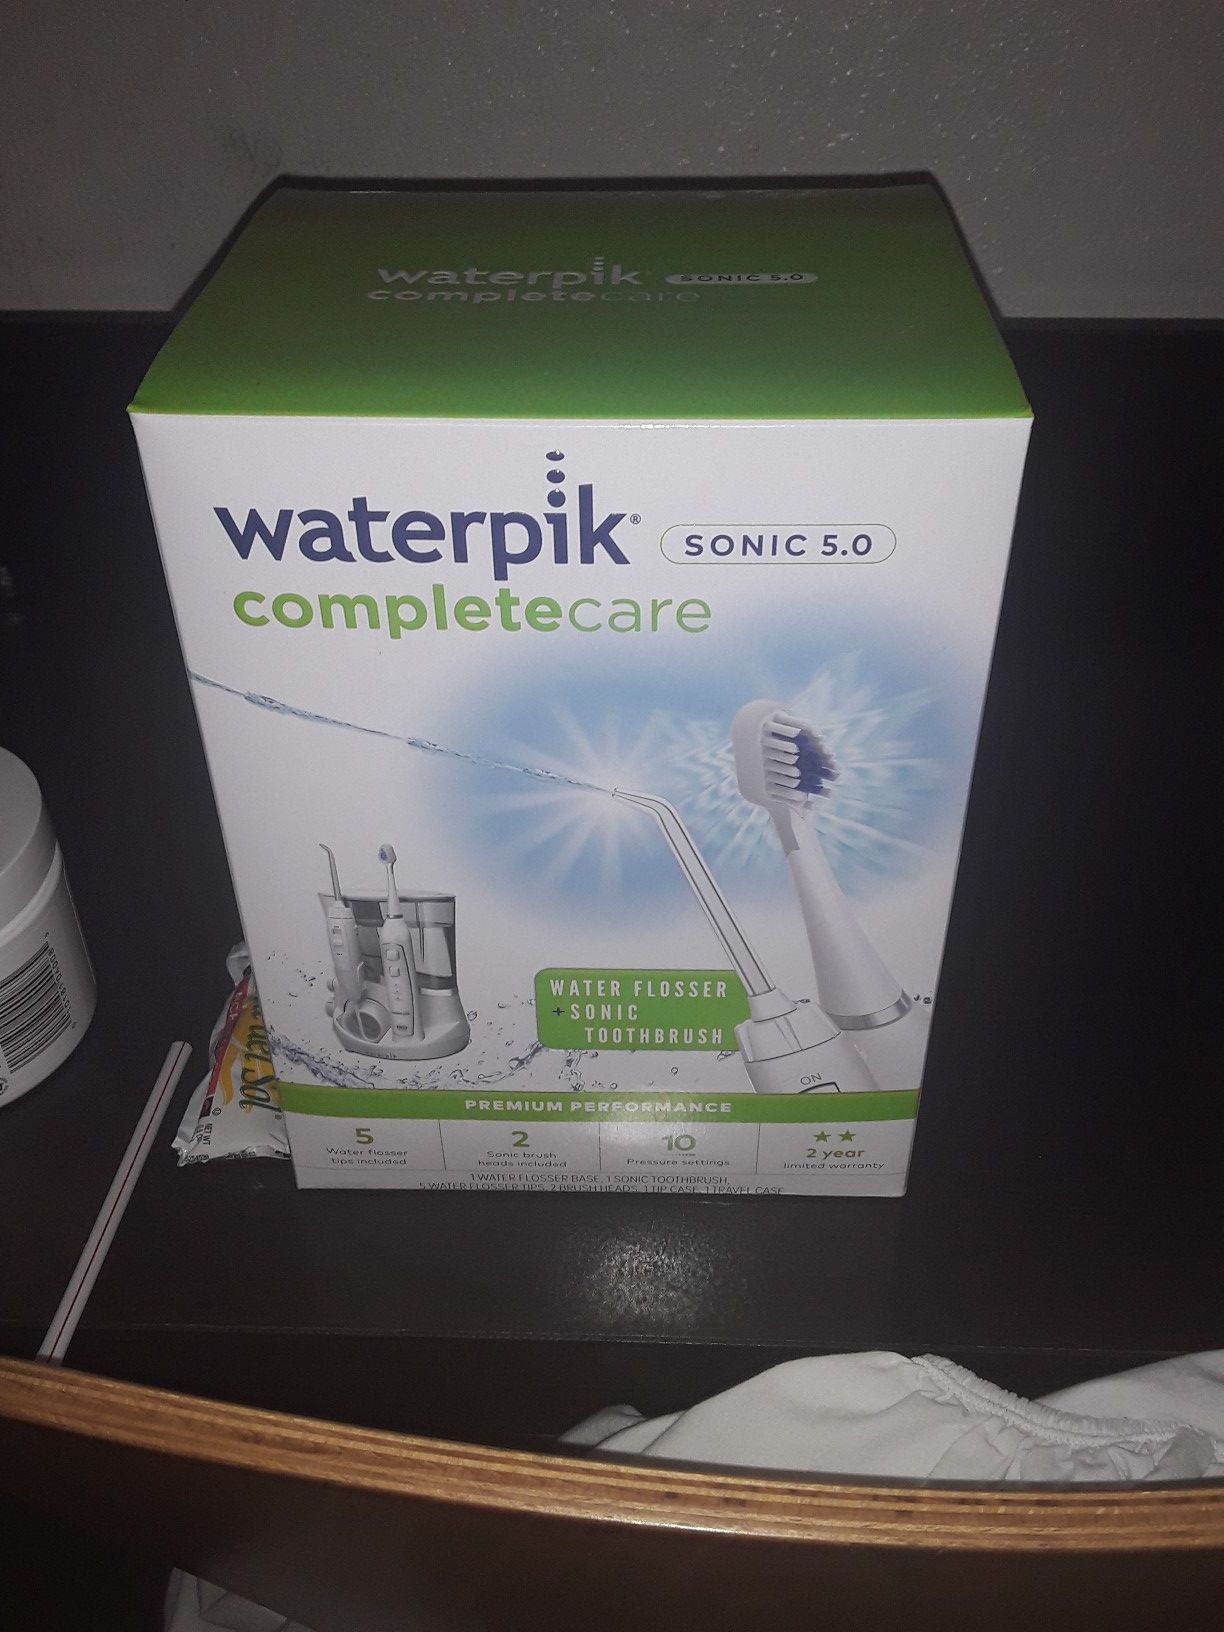 Waterpik flossed and sonic toothbrush